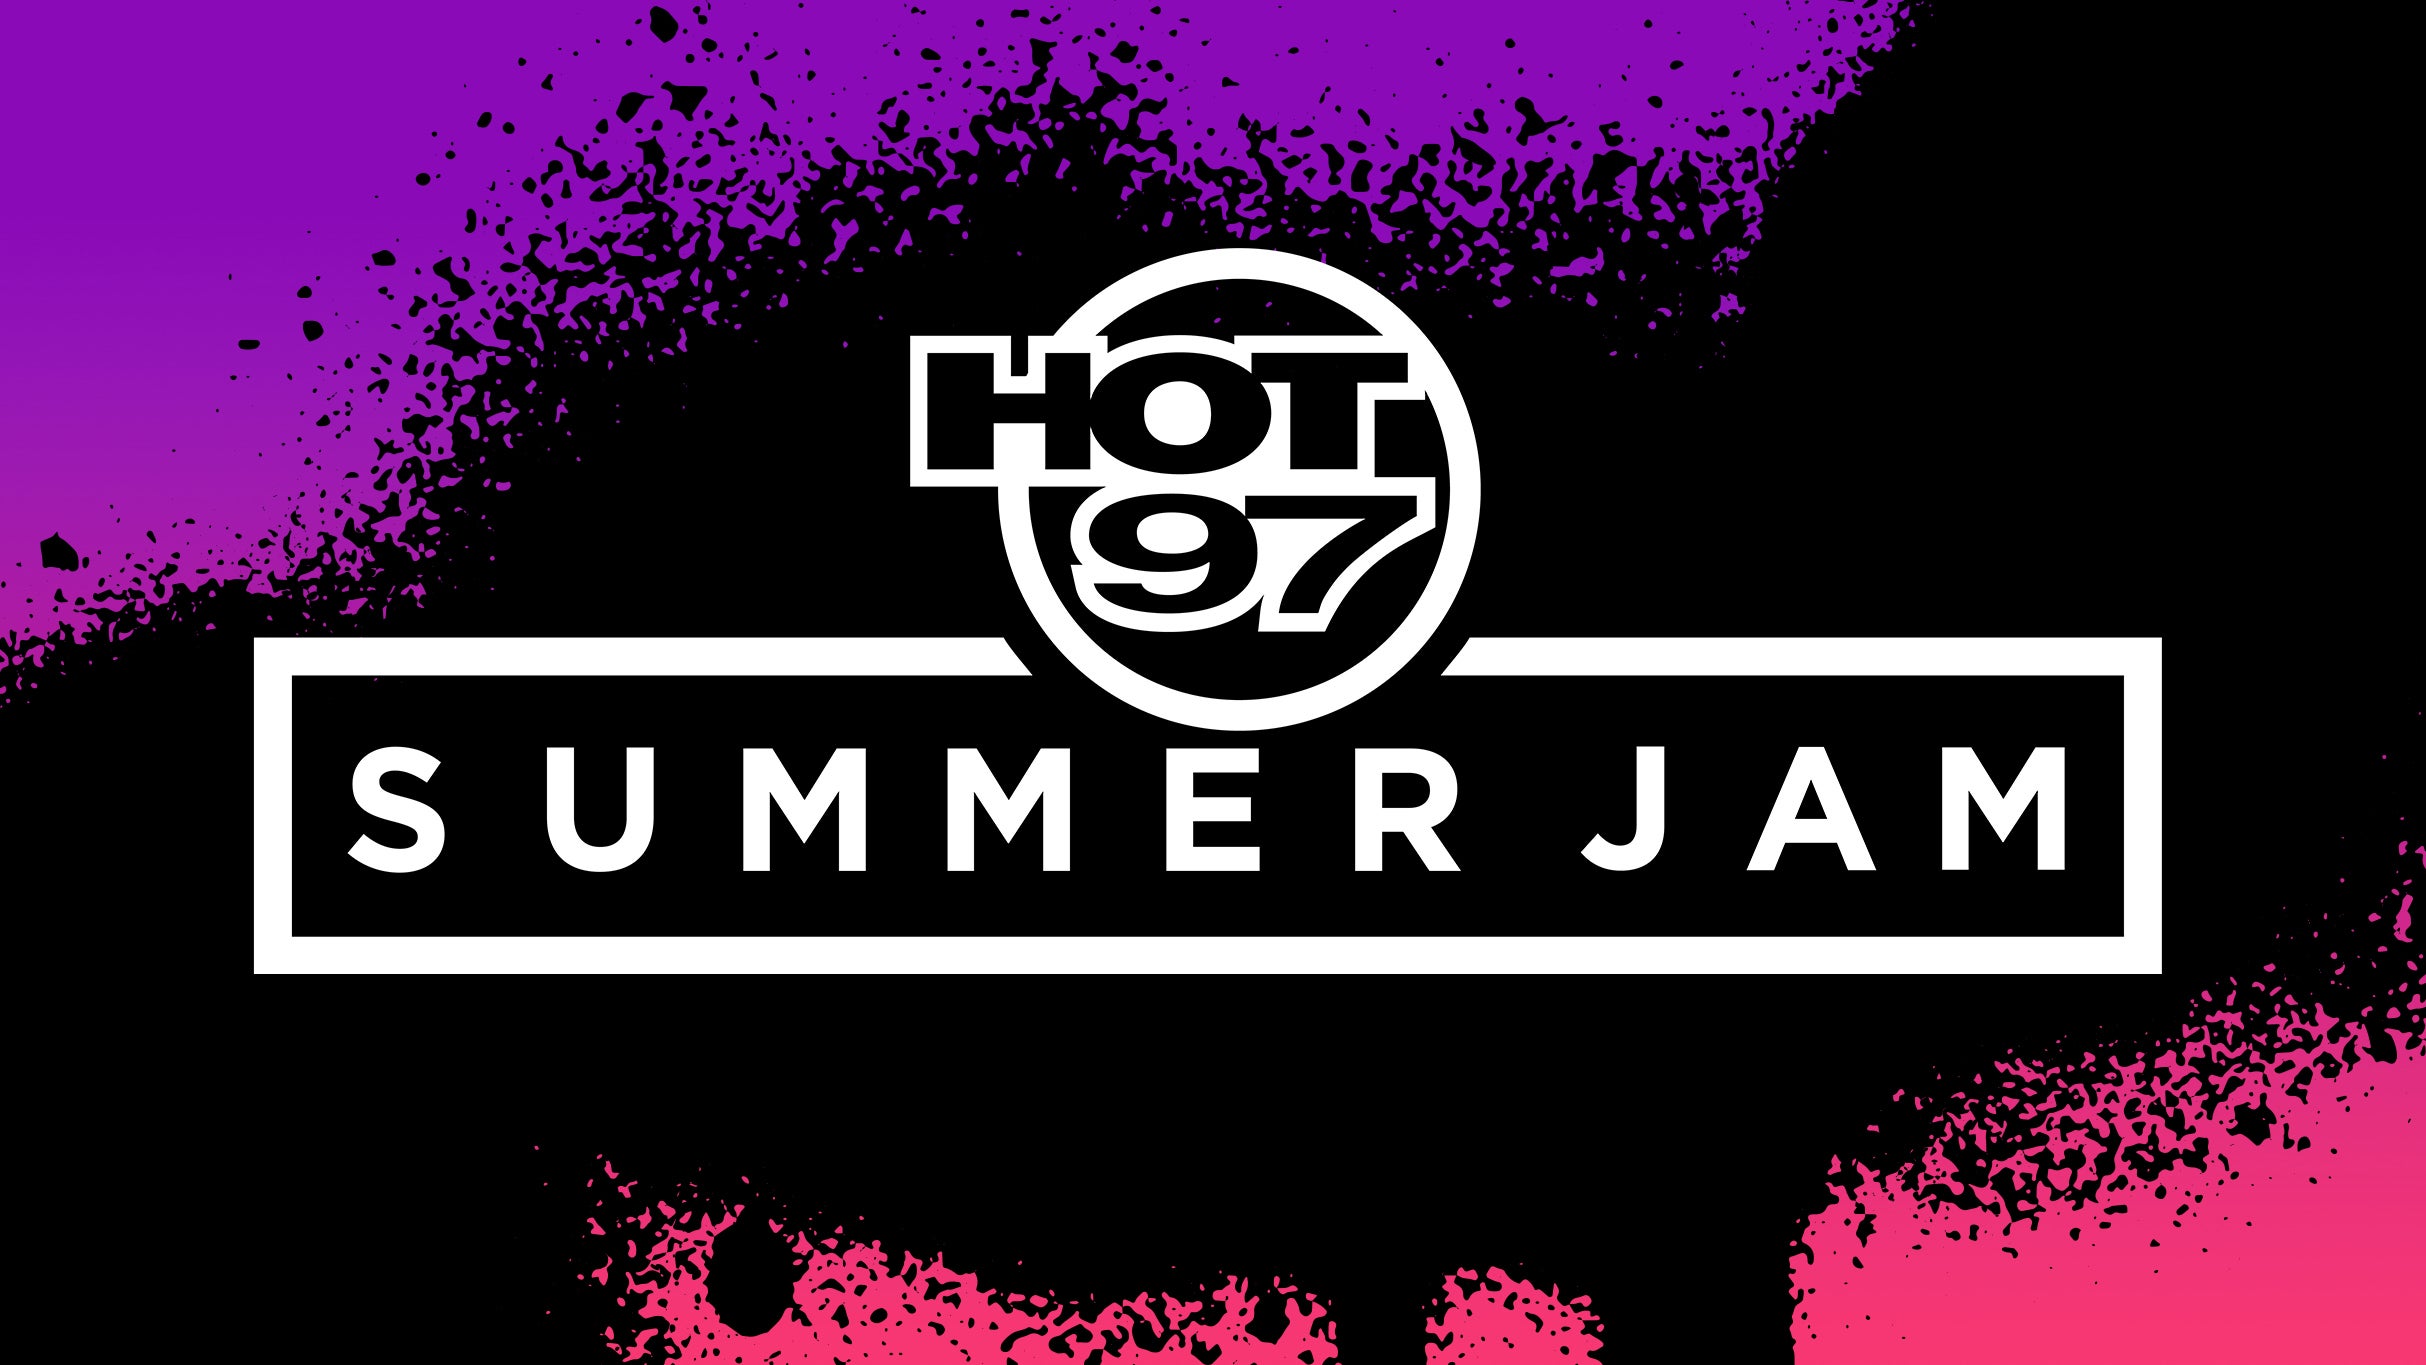 HOT 97 Summer Jam presale code